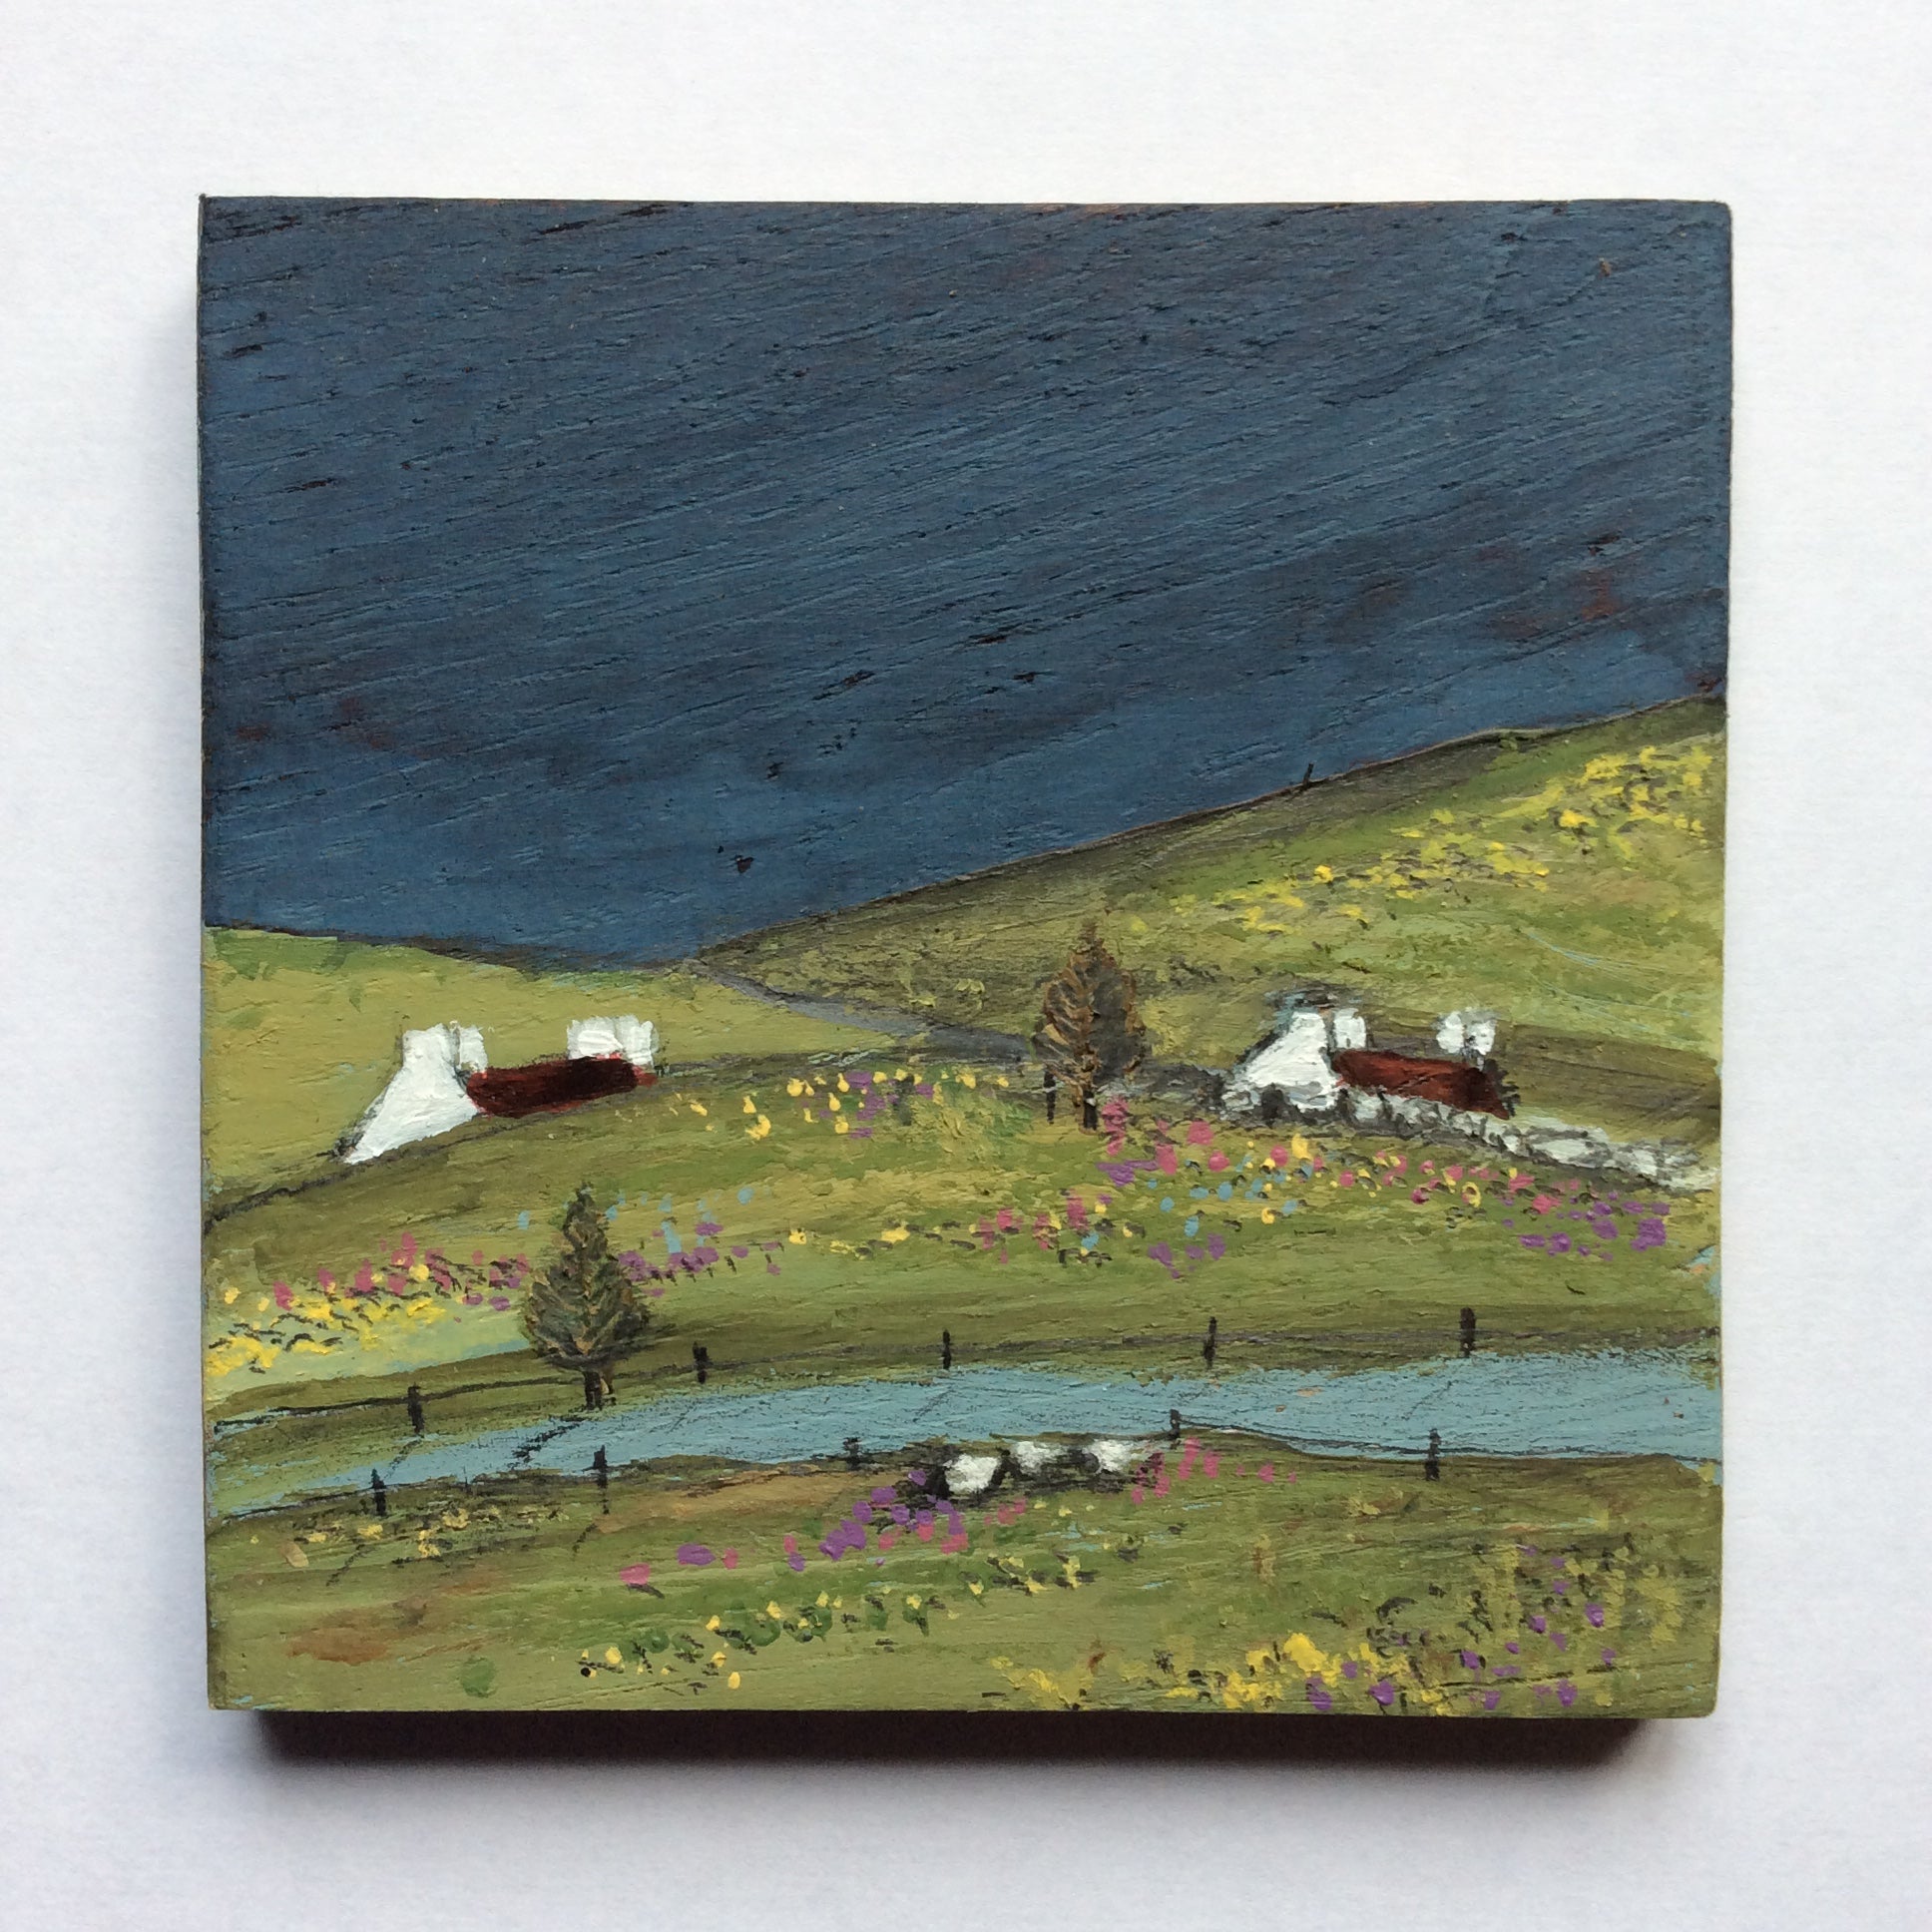 Mixed Media Art on wood By Louise O'Hara - "Under the dark sky lay lush green fields”